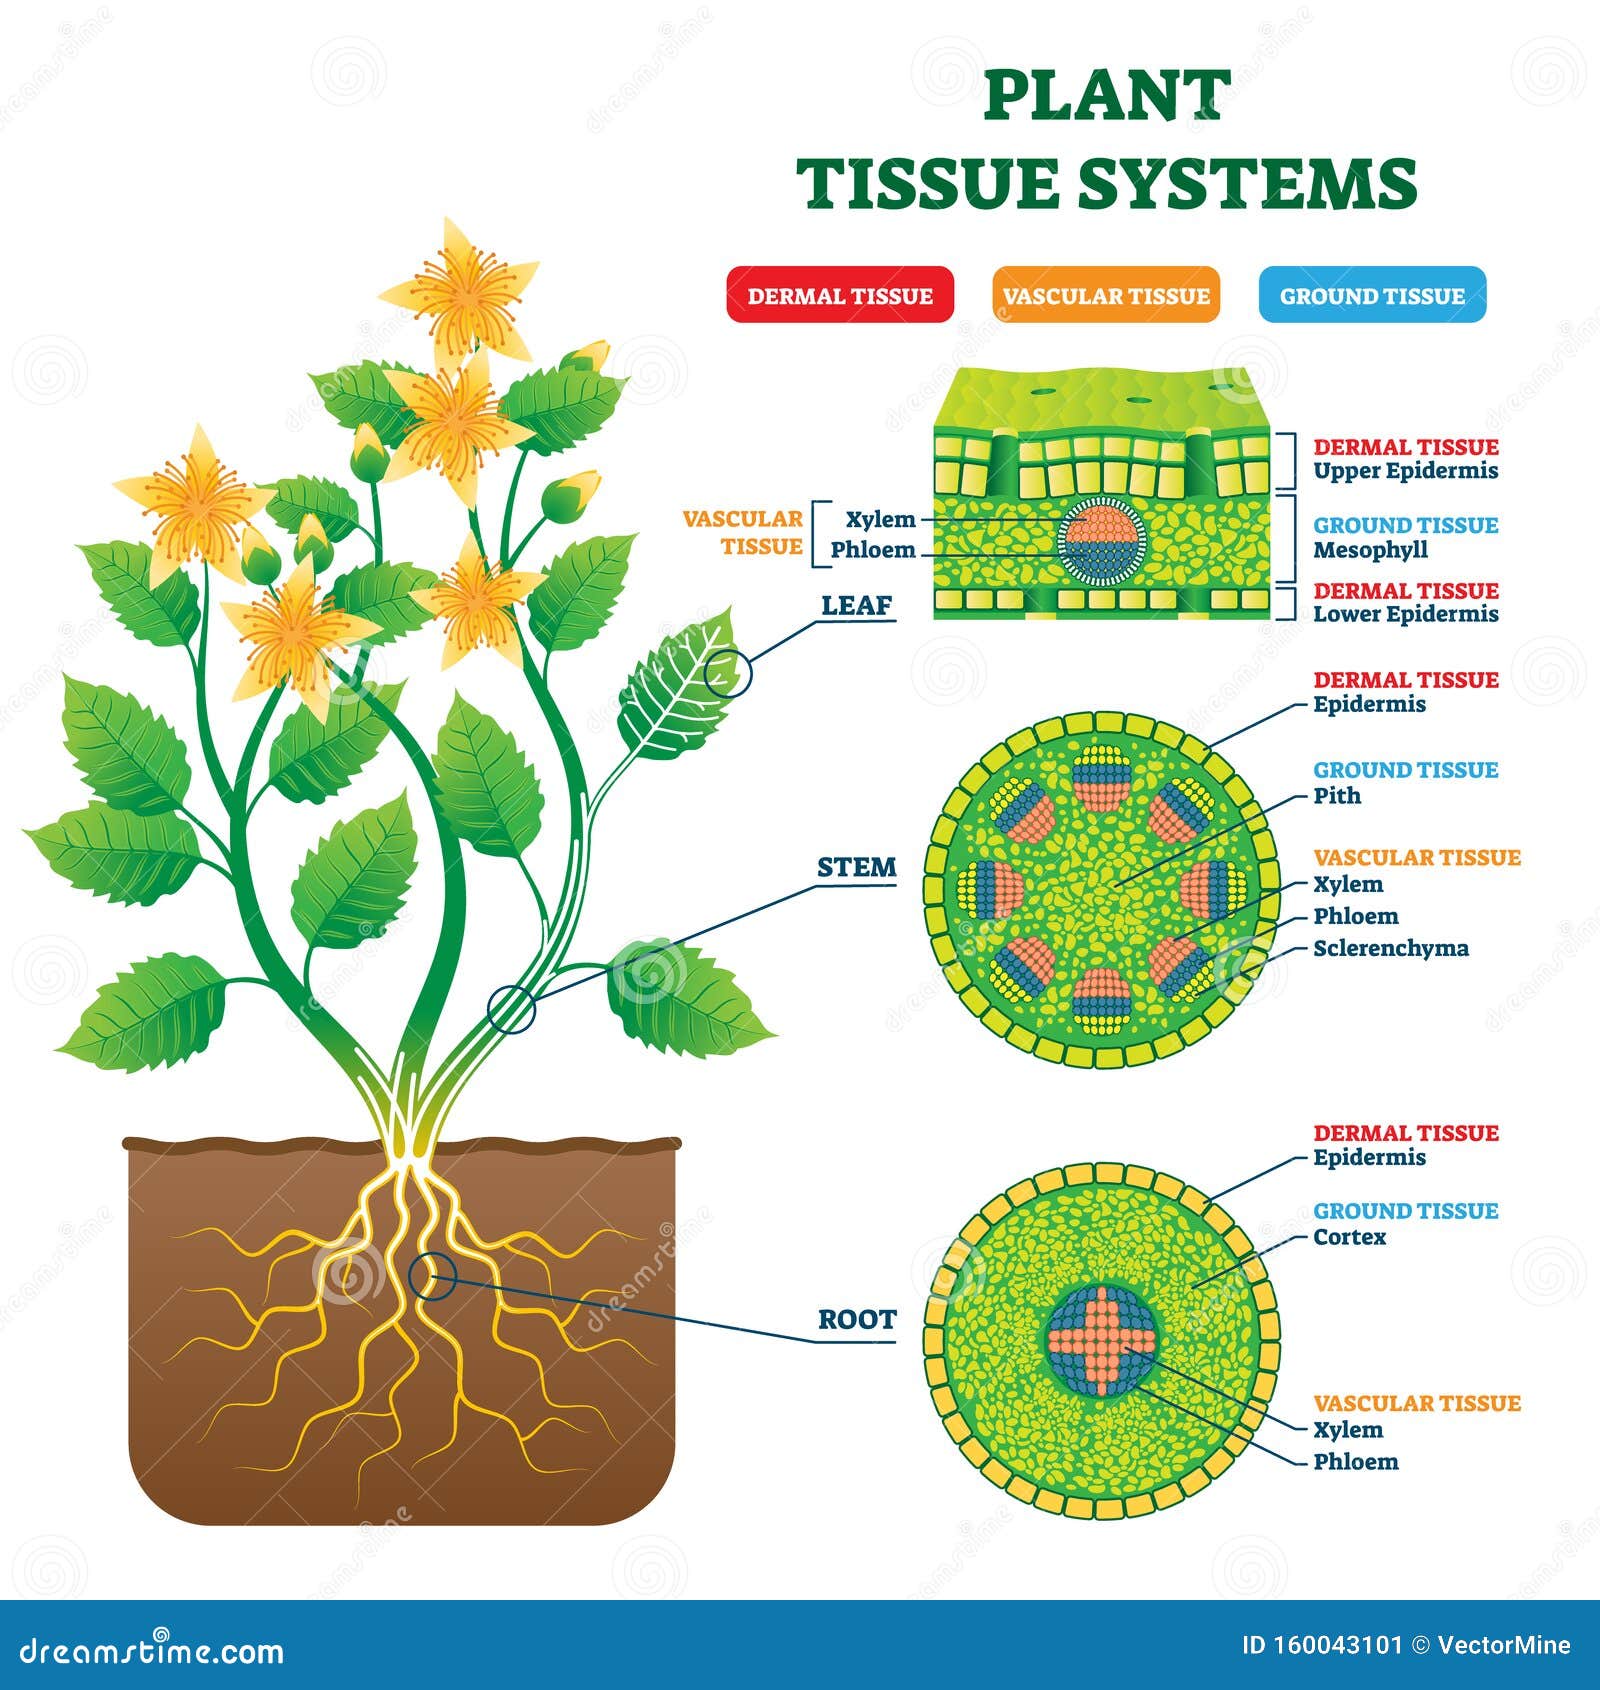 Plant tissues. Ткани растений схема. Схема растения. Структура растения. Строение растения схема.